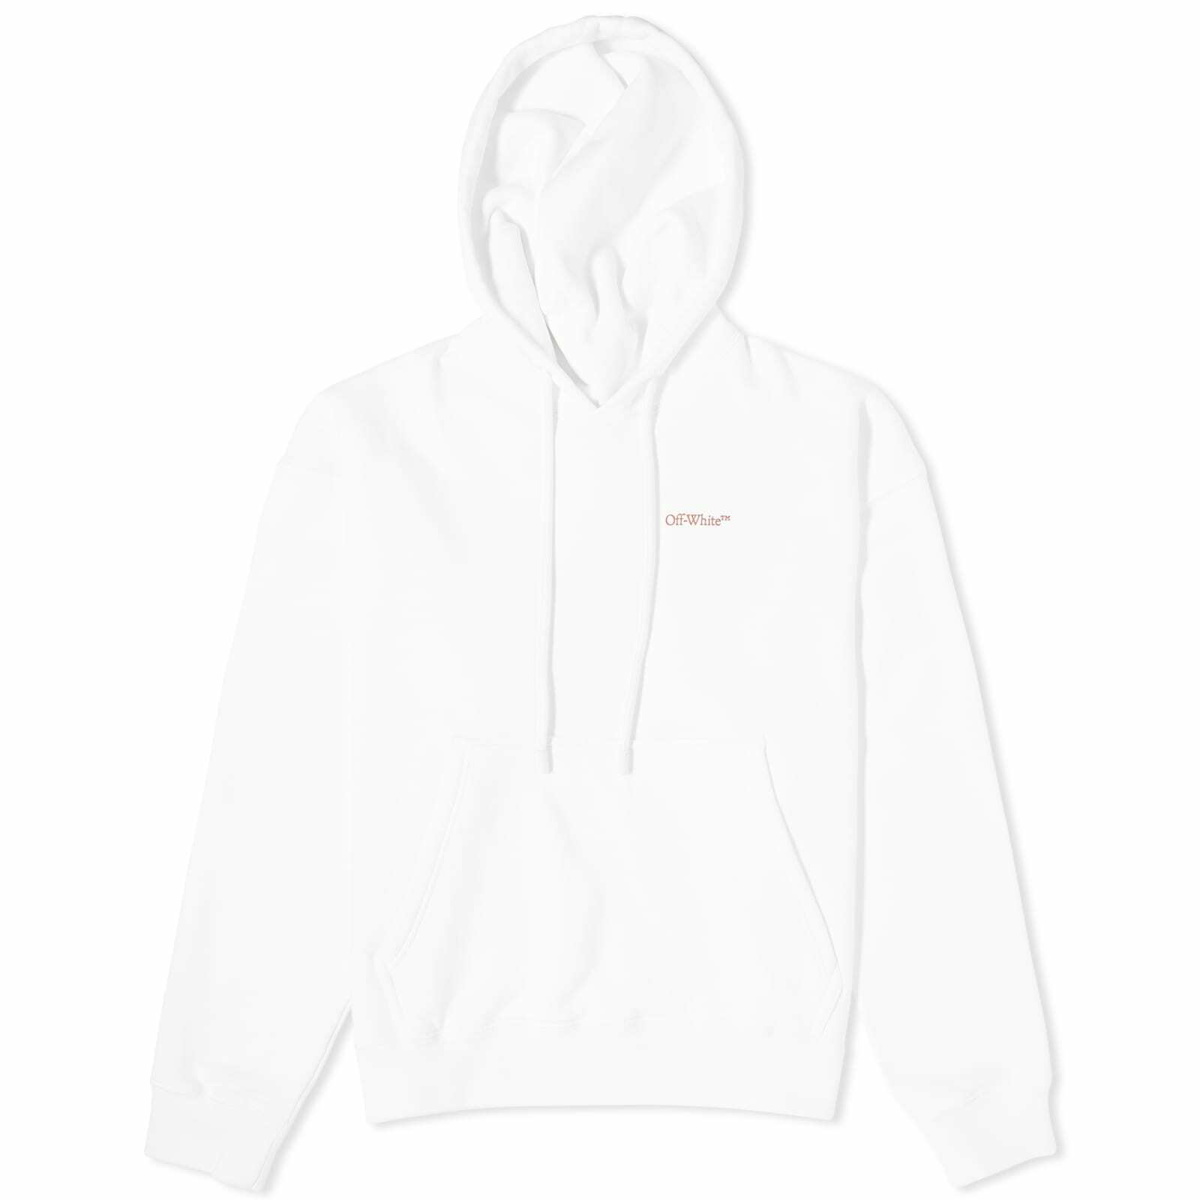 Brand New OFF-WHITE Agreement Sweatshirt Size M